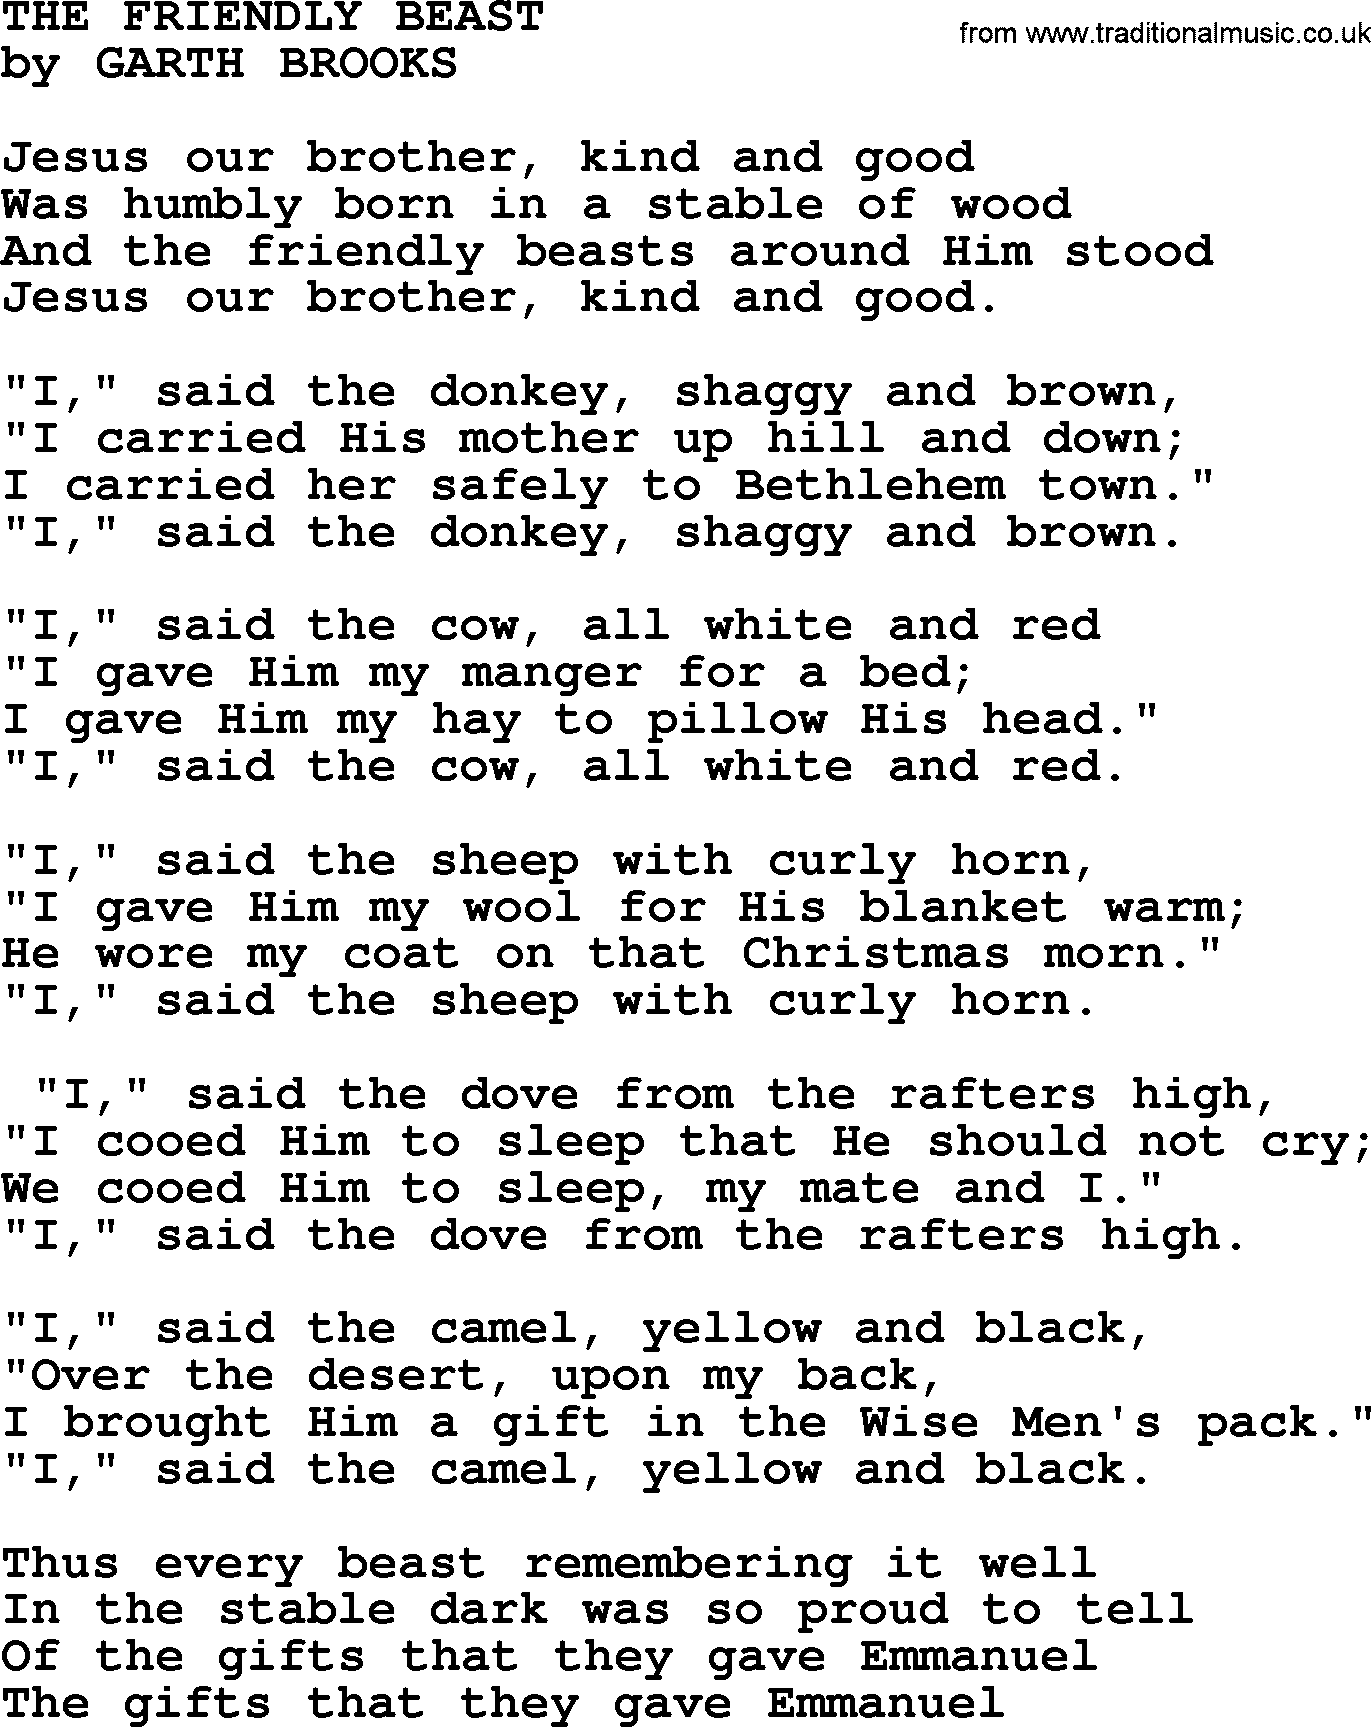 Garth Brooks song: The Friendly Beast, lyrics